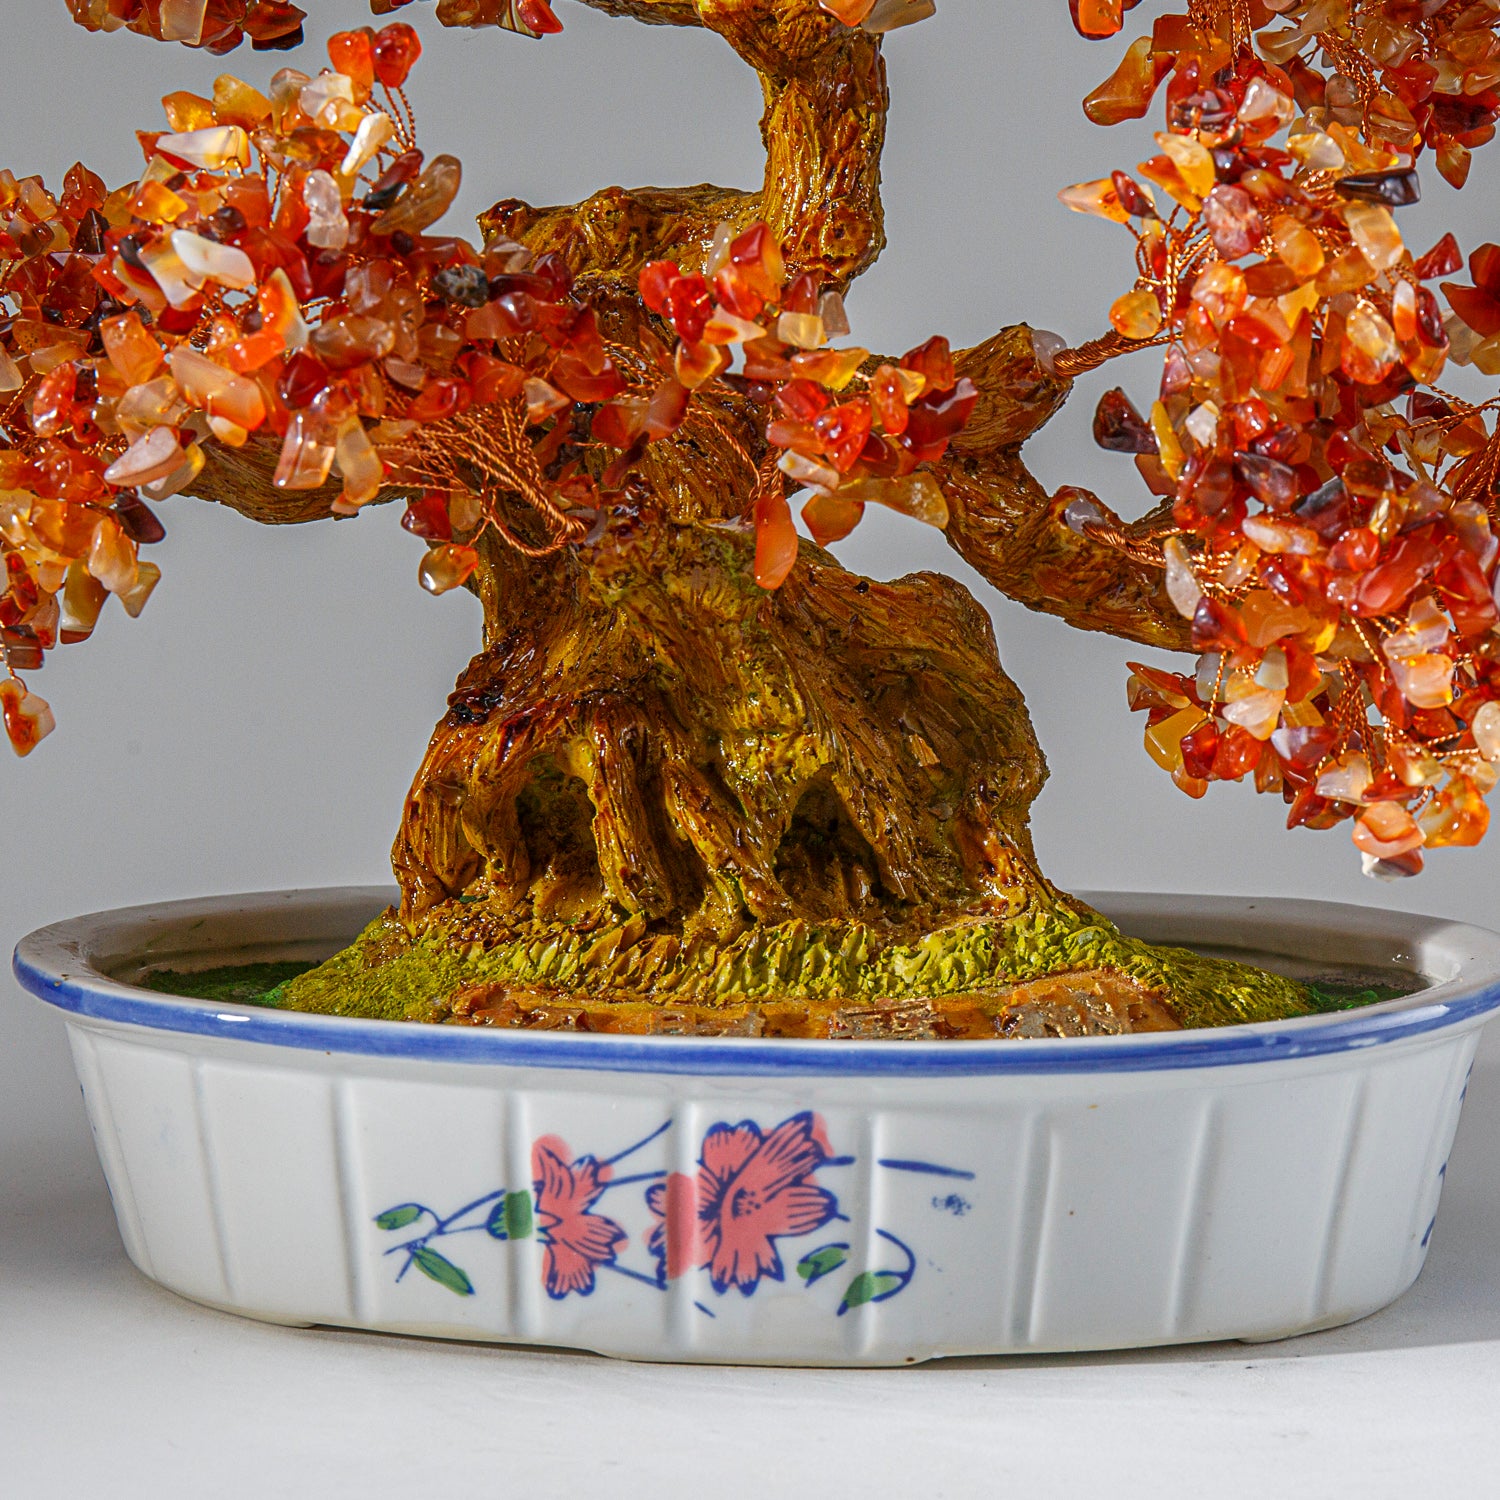 Genuine Carnelian Gemstone Bonsai Tree in Oval Ceramic Pot (11” Tall)